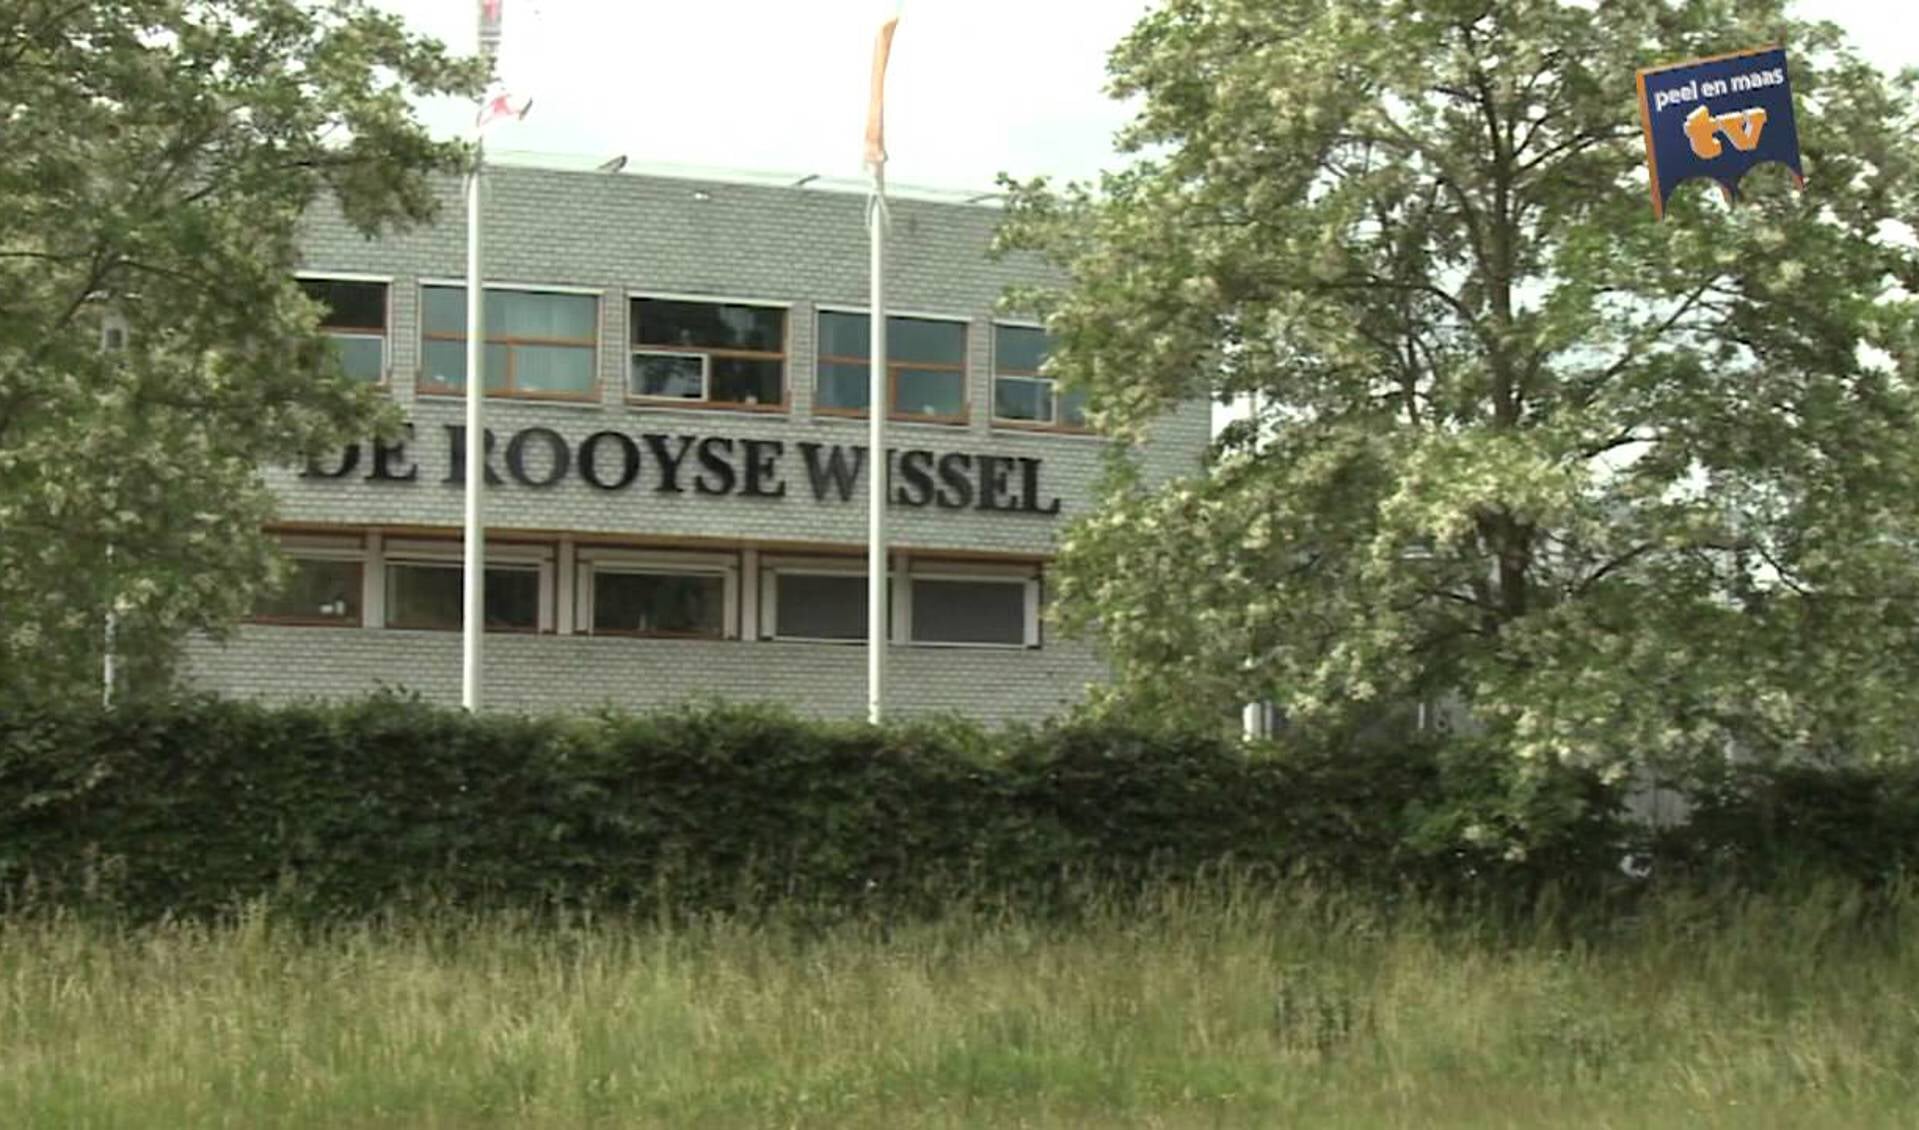 De Rooyse Wissel in Oostrum. Foto: archief Peel en Maas. 